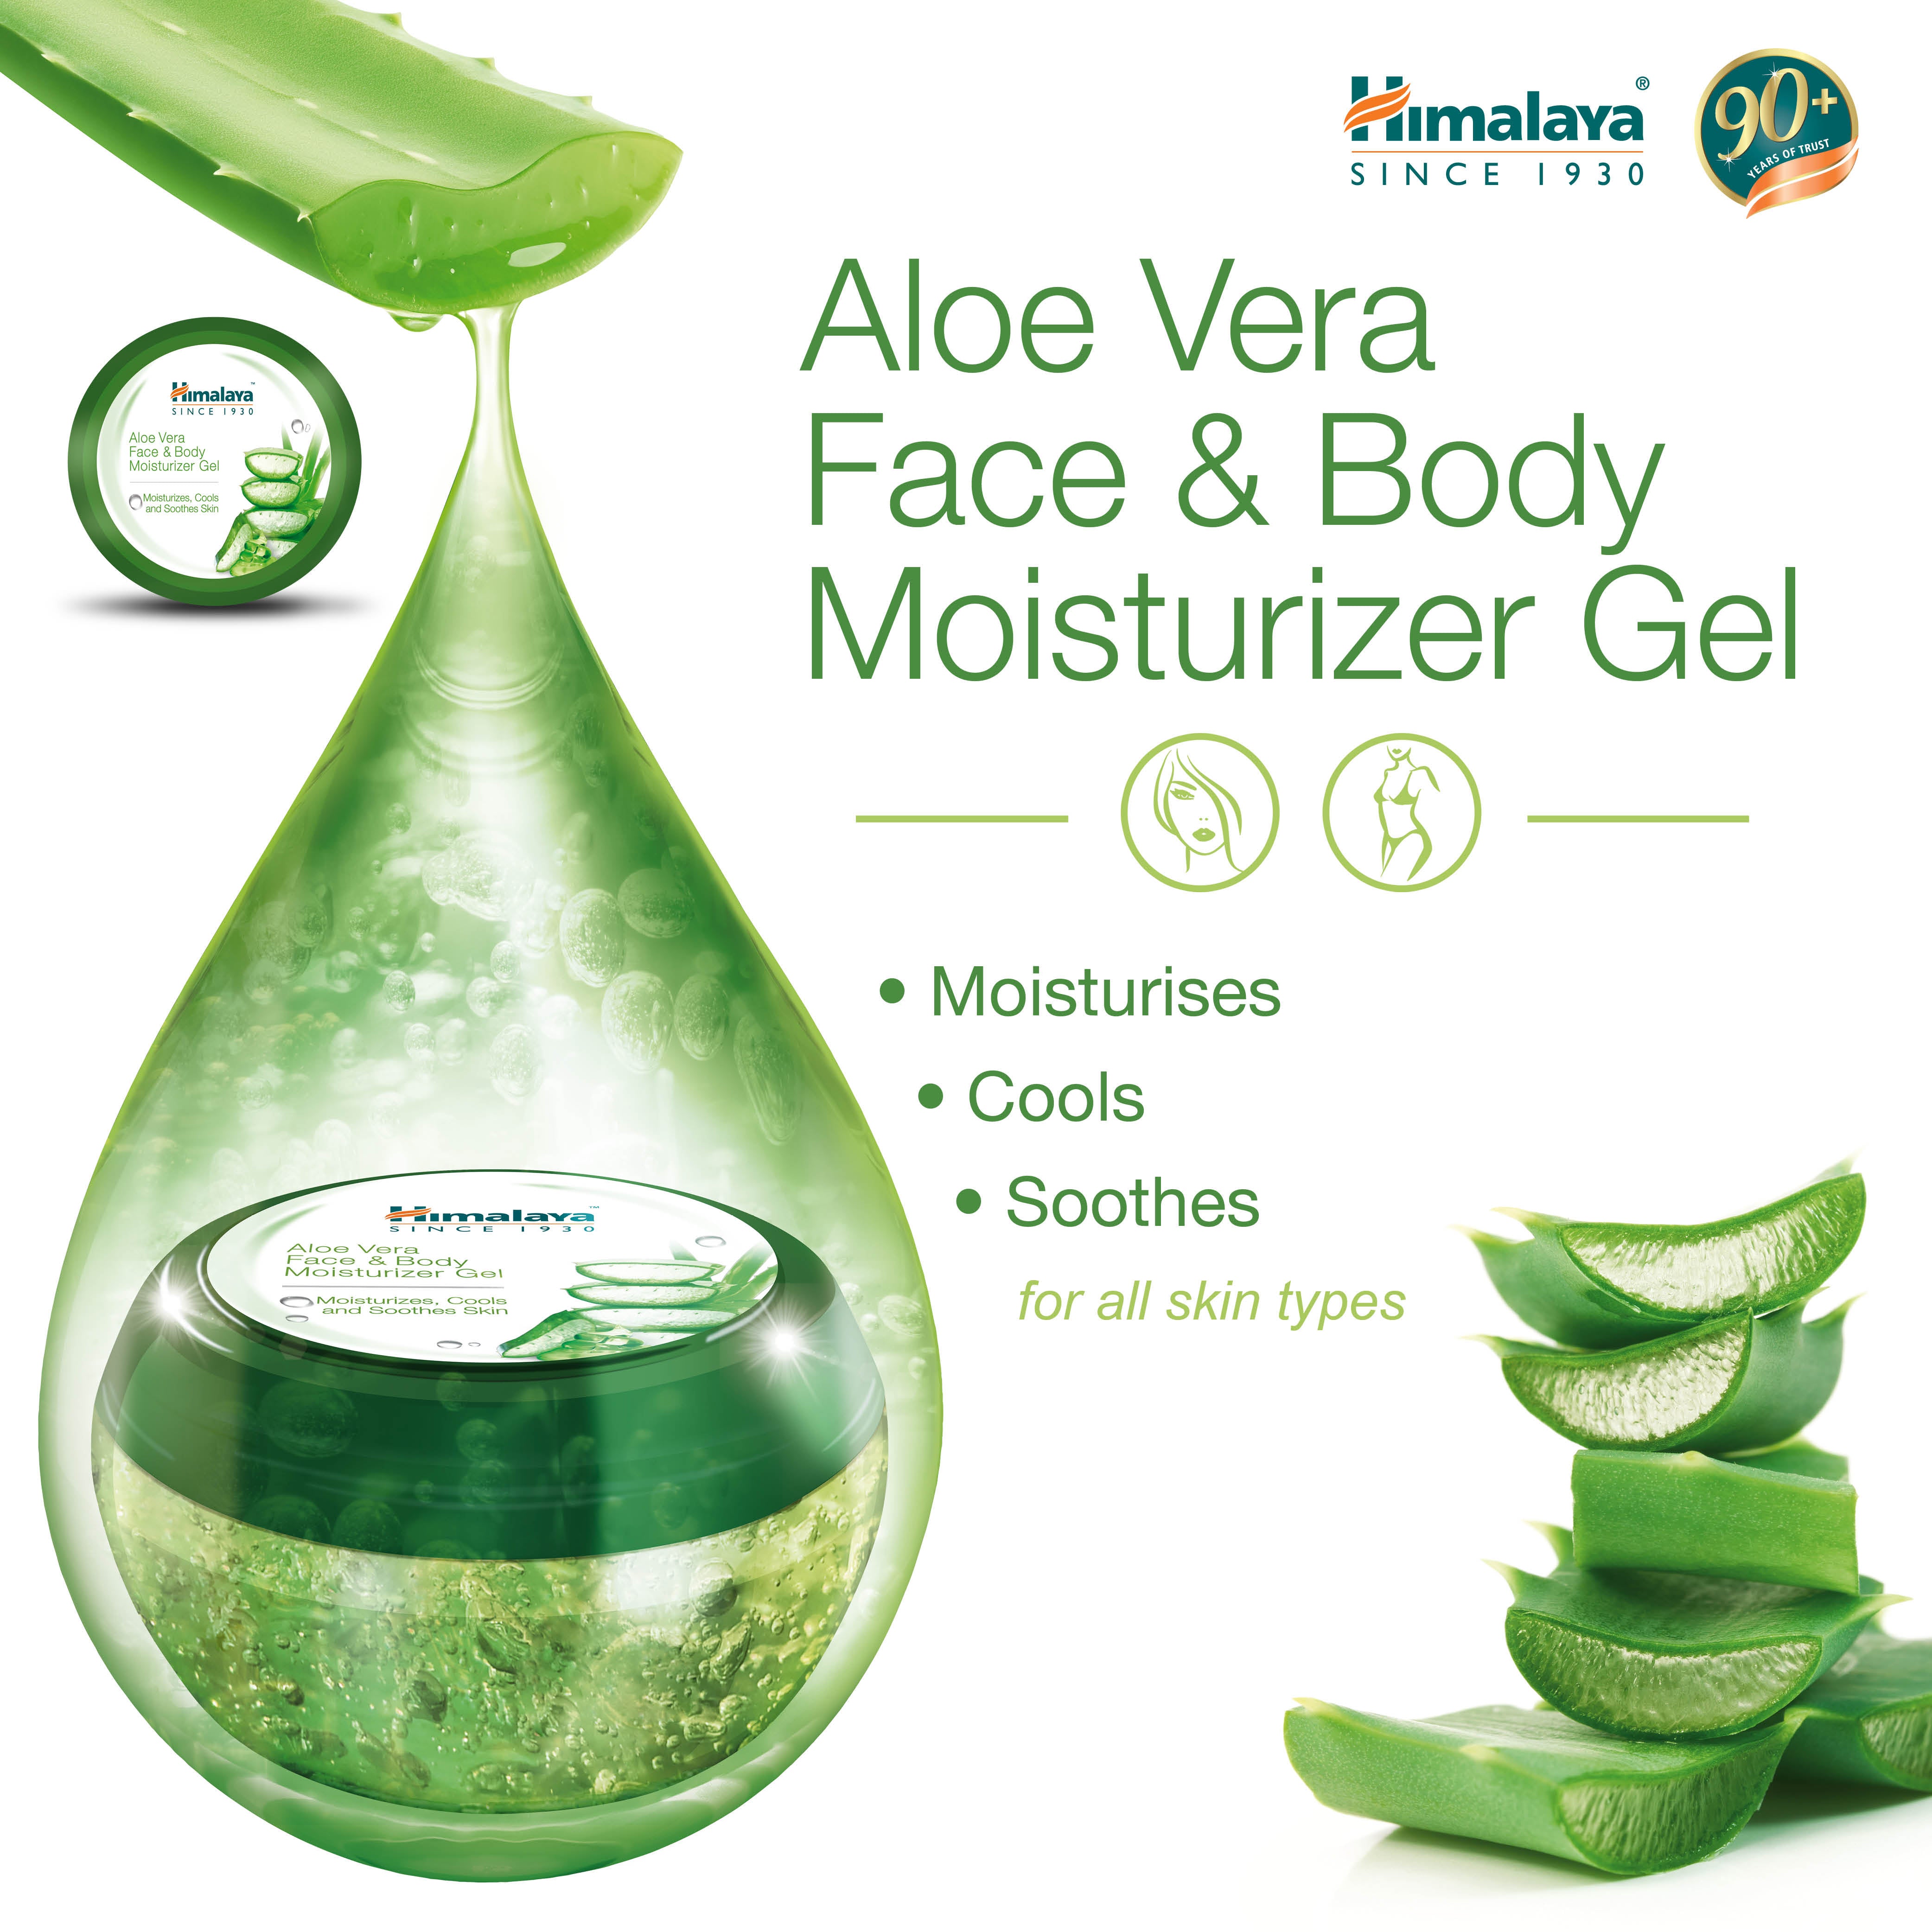 Himalaya Aloe Vera Face & Body Moisturizer Gel - For all skin types